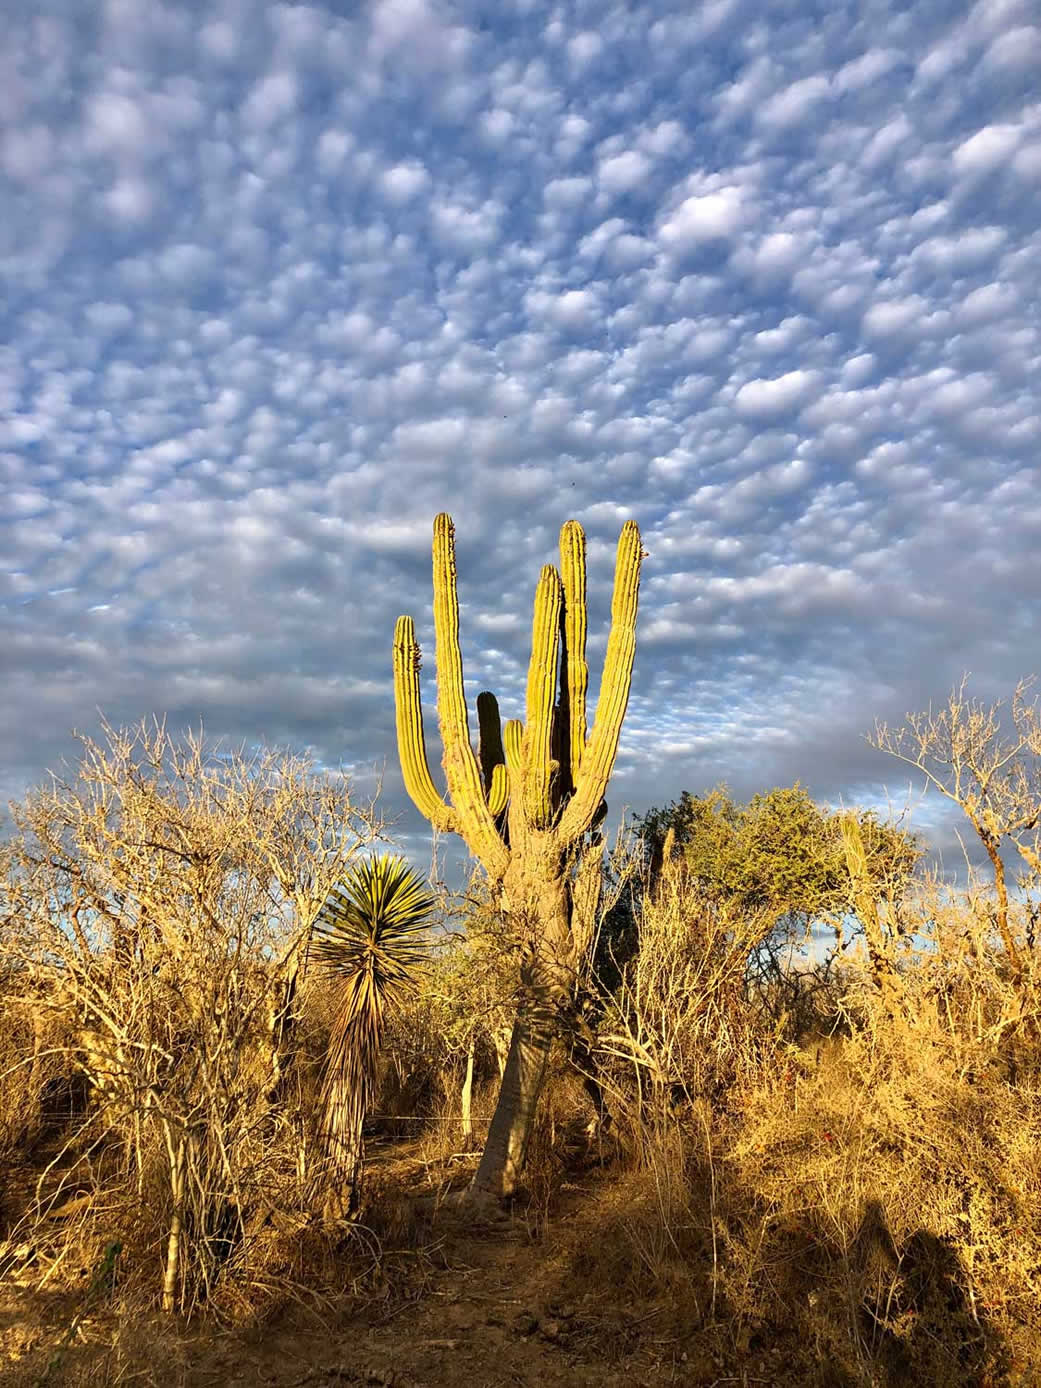 A centenary saguaro cactus.